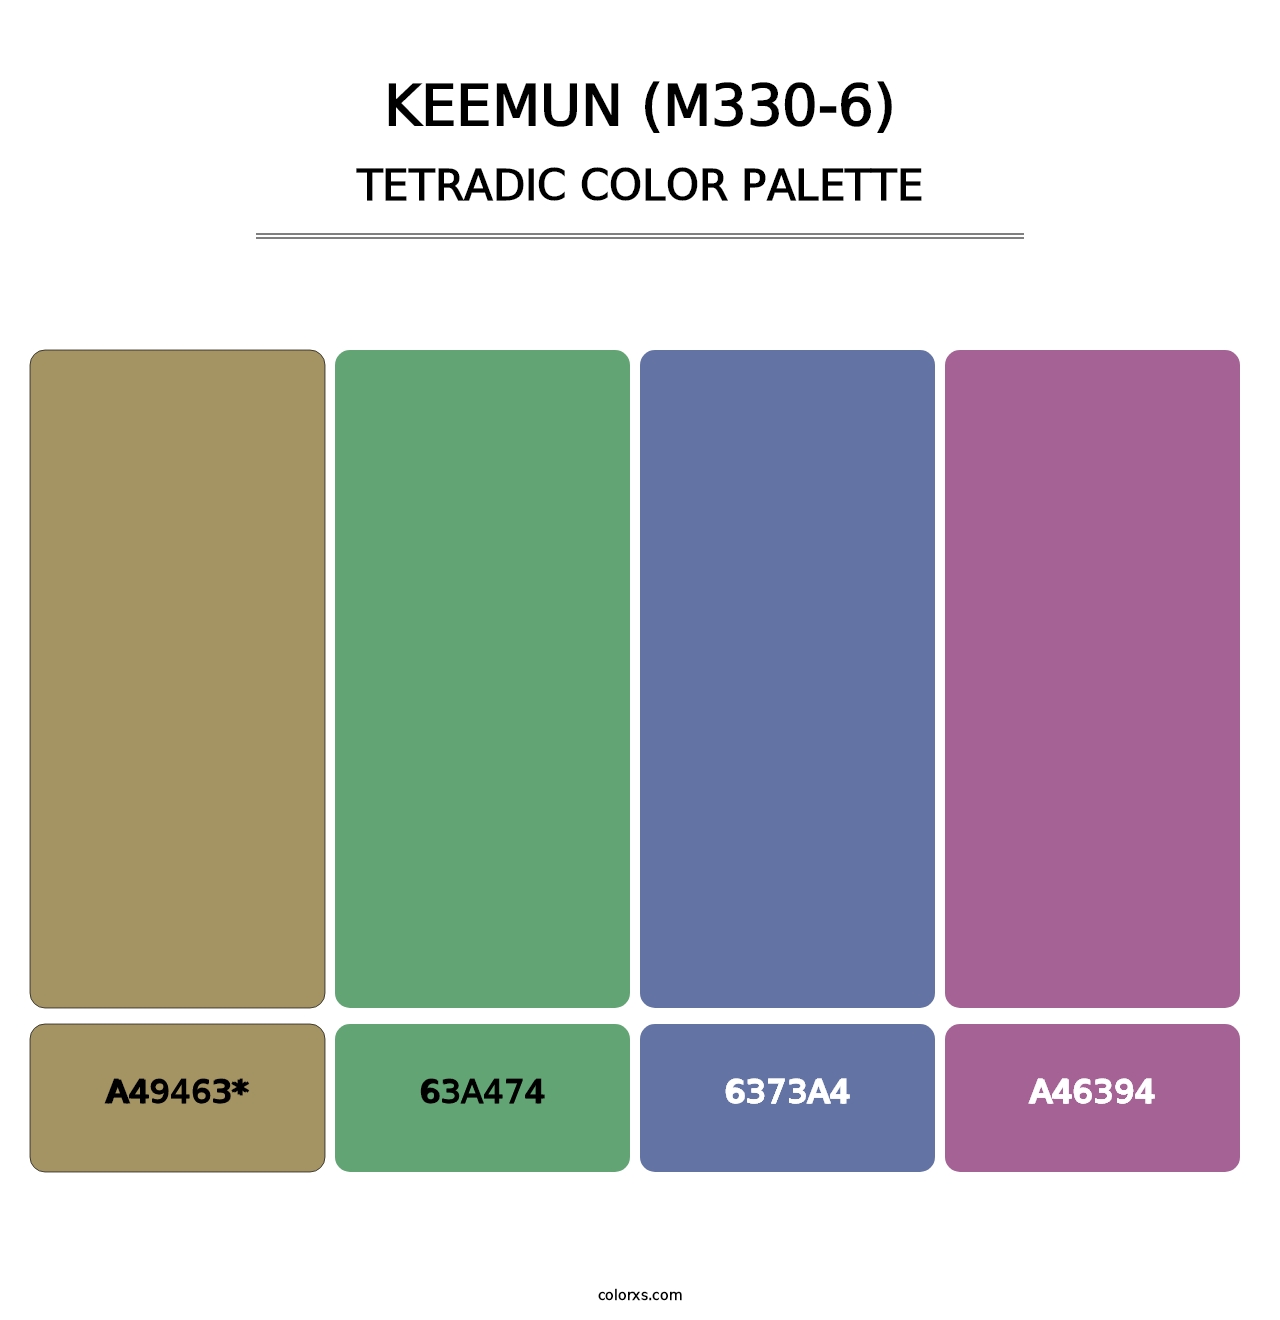 Keemun (M330-6) - Tetradic Color Palette